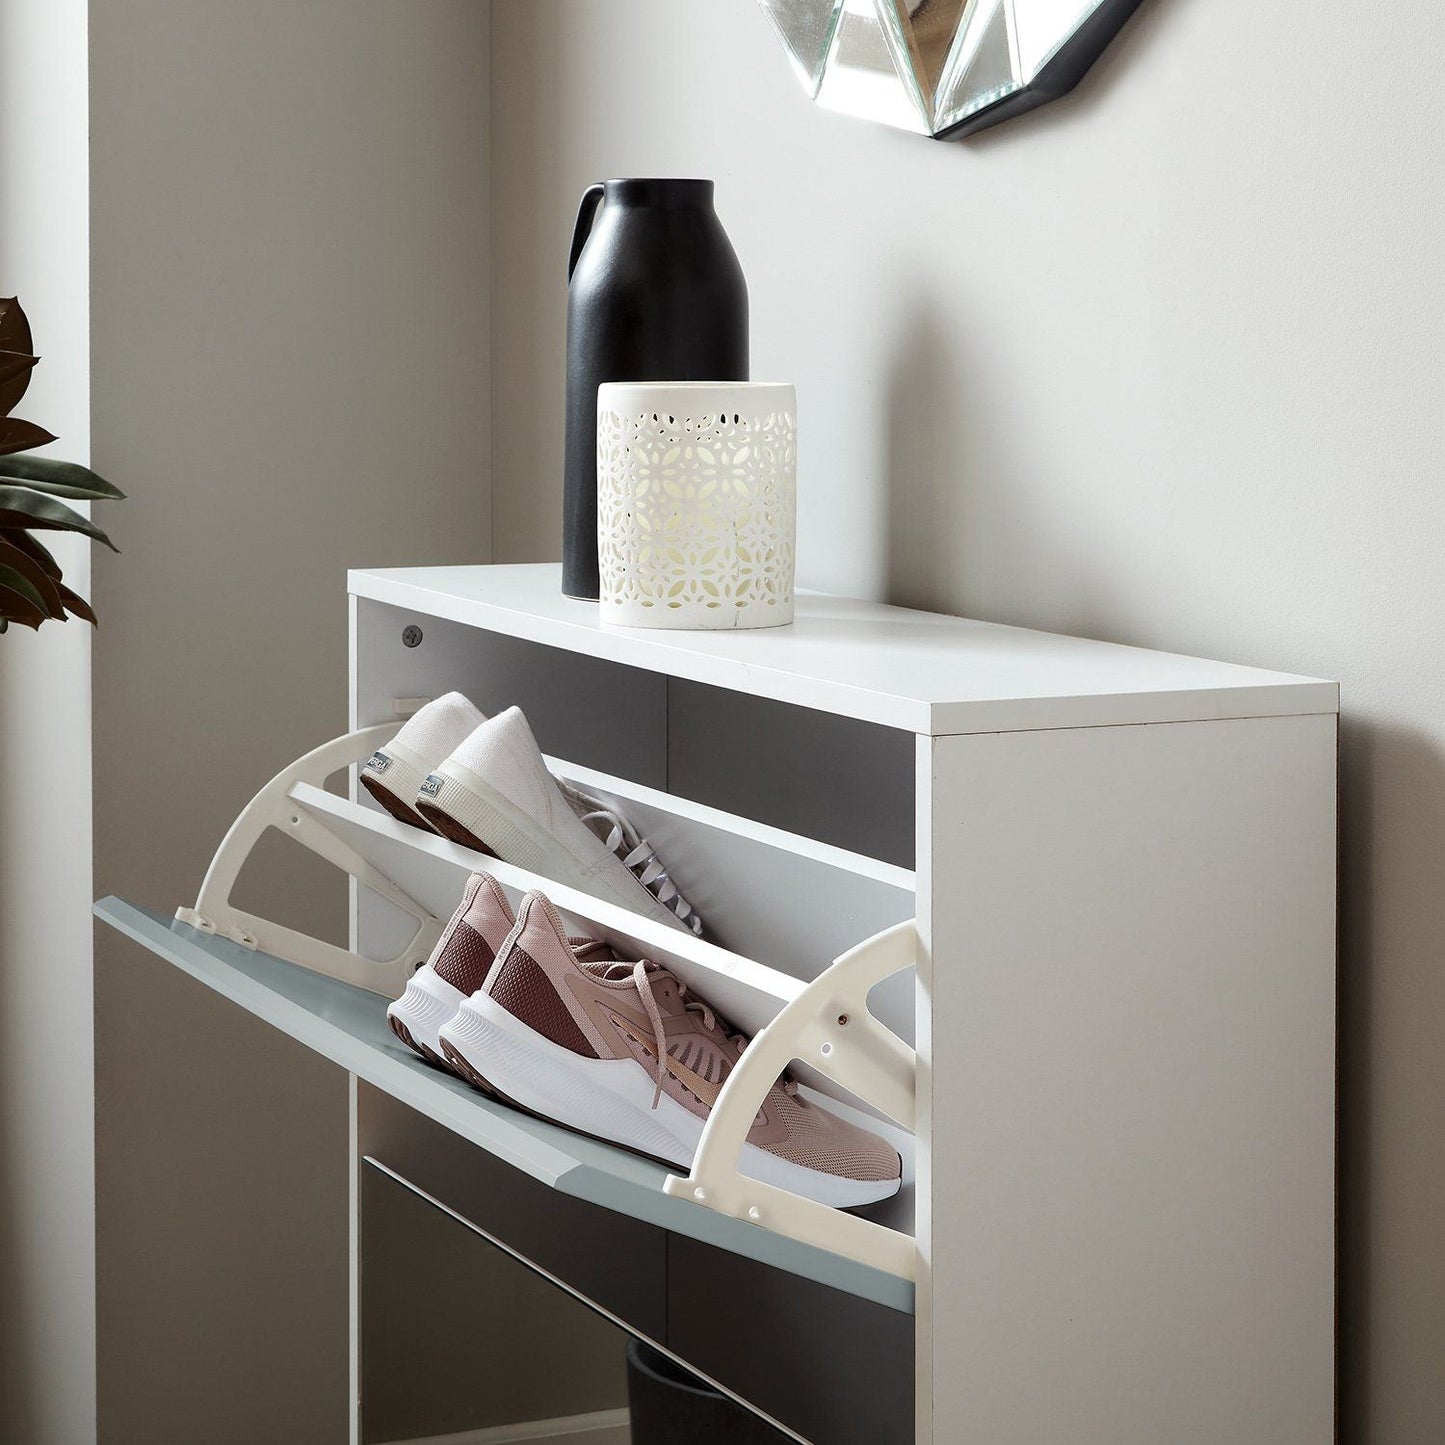 Anderson shoe cabinet - 2 door - white and grey - Laura James